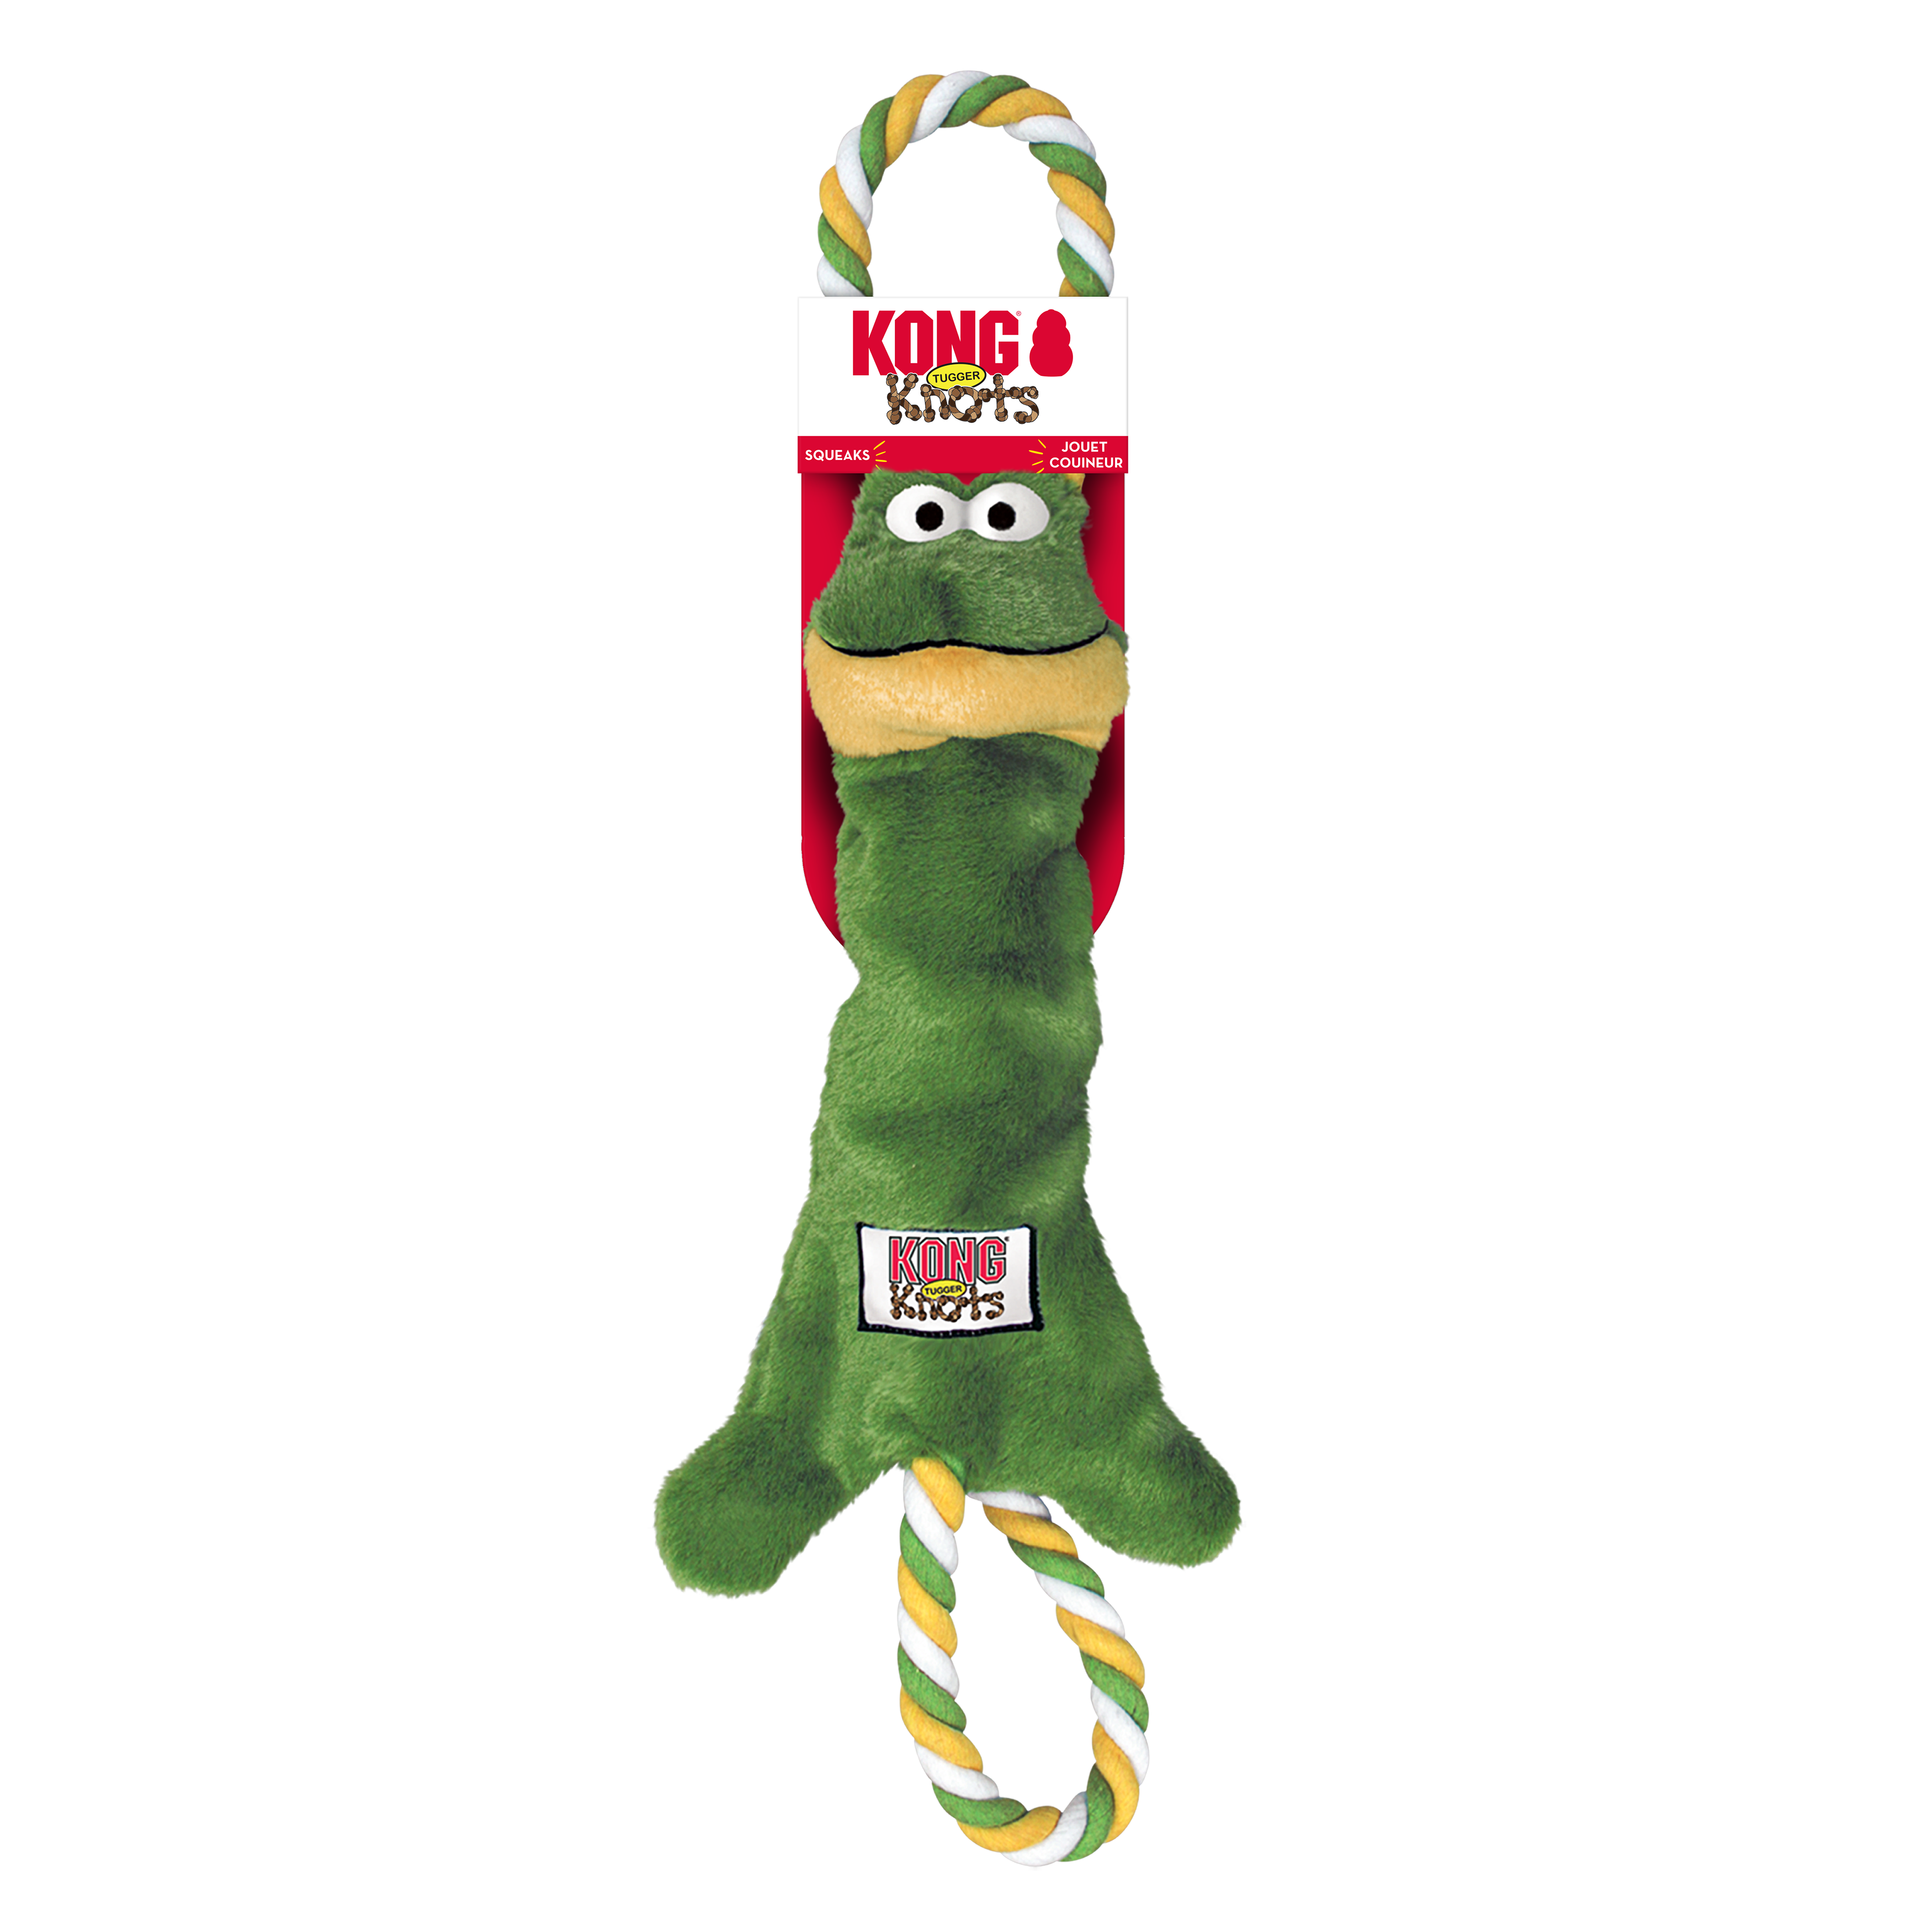 Tugger Knots Frog onpack product image